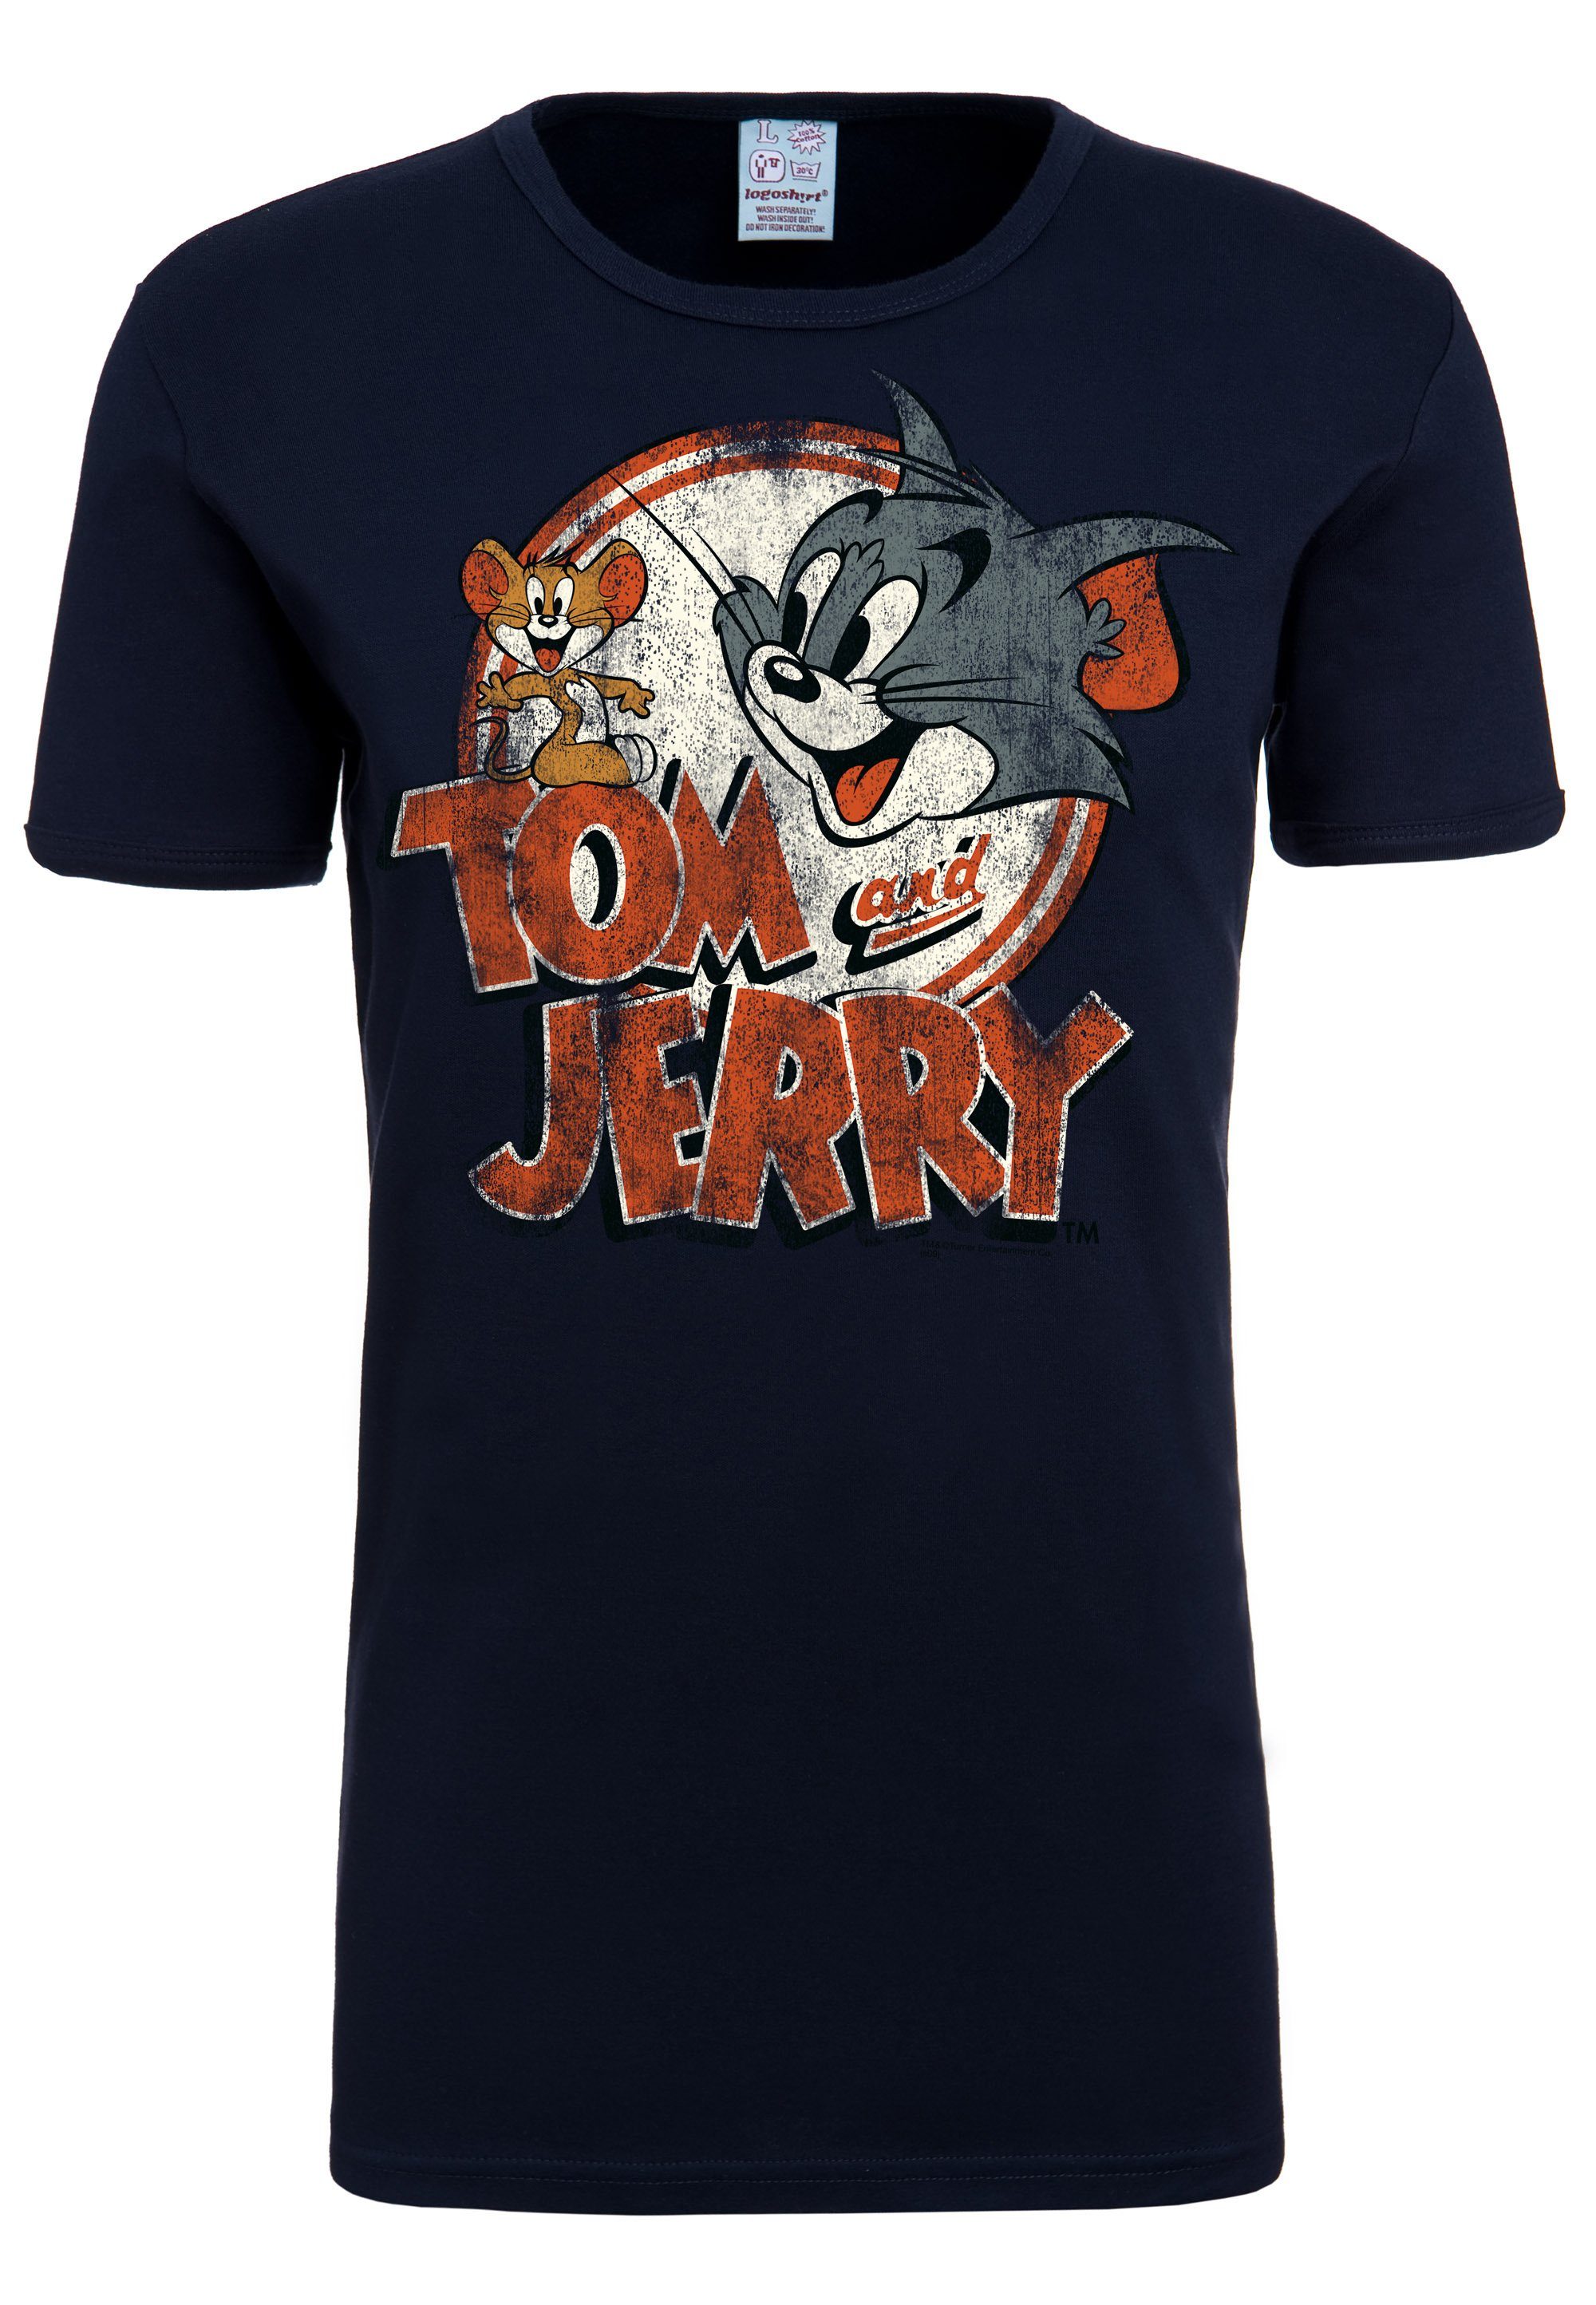 T-Shirt Originaldesign Jerry schwarz mit LOGOSHIRT lizenziertem & Tom